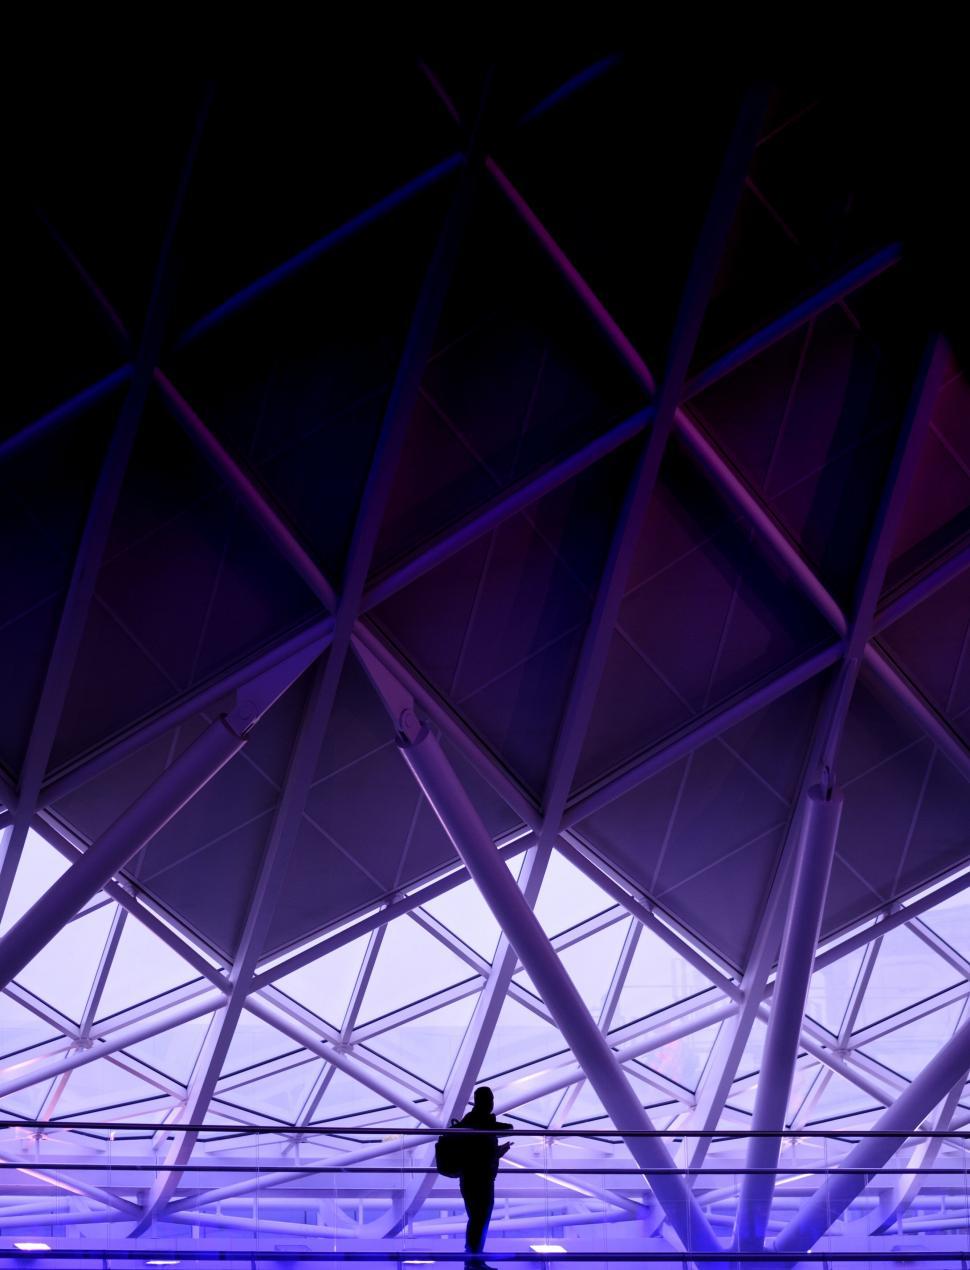 Free Image of Solitary figure under futuristic purple lighting 